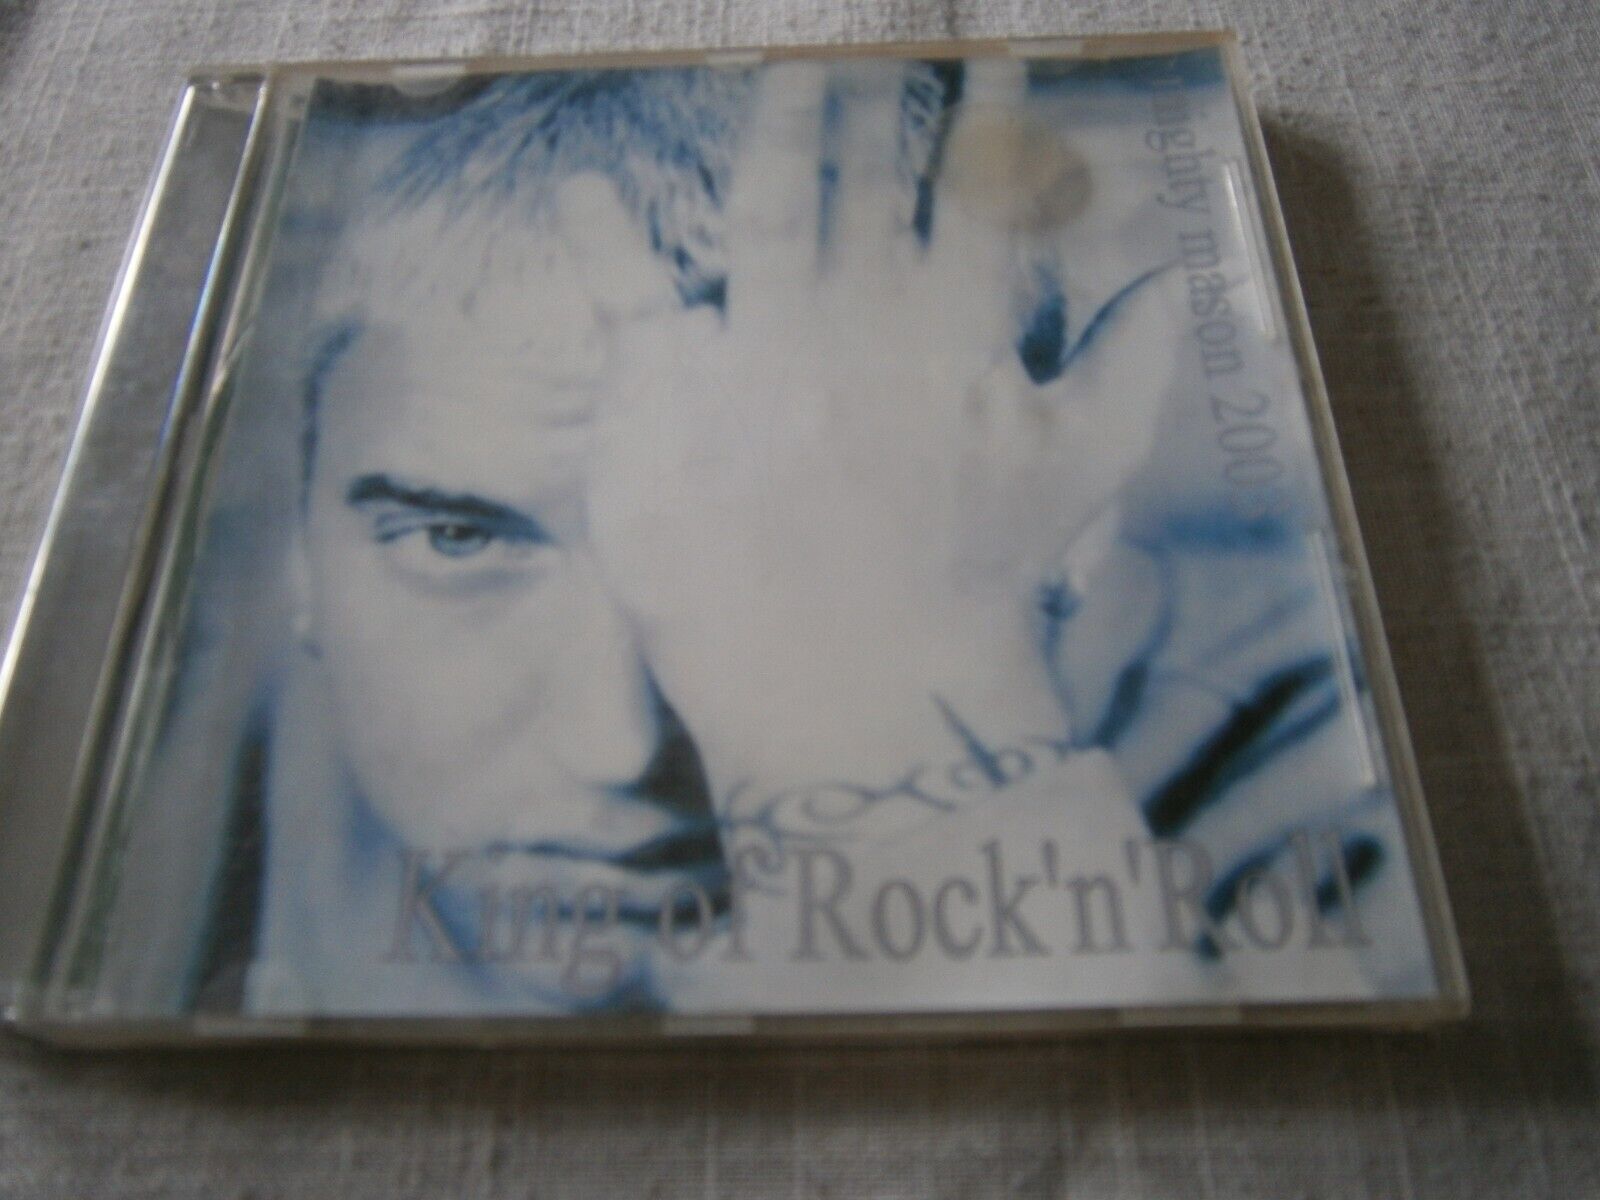 EMINEM / 50 CENT / JAY-Z / DR DRE - KING OF ROCK N ROLL - CD ALBUM